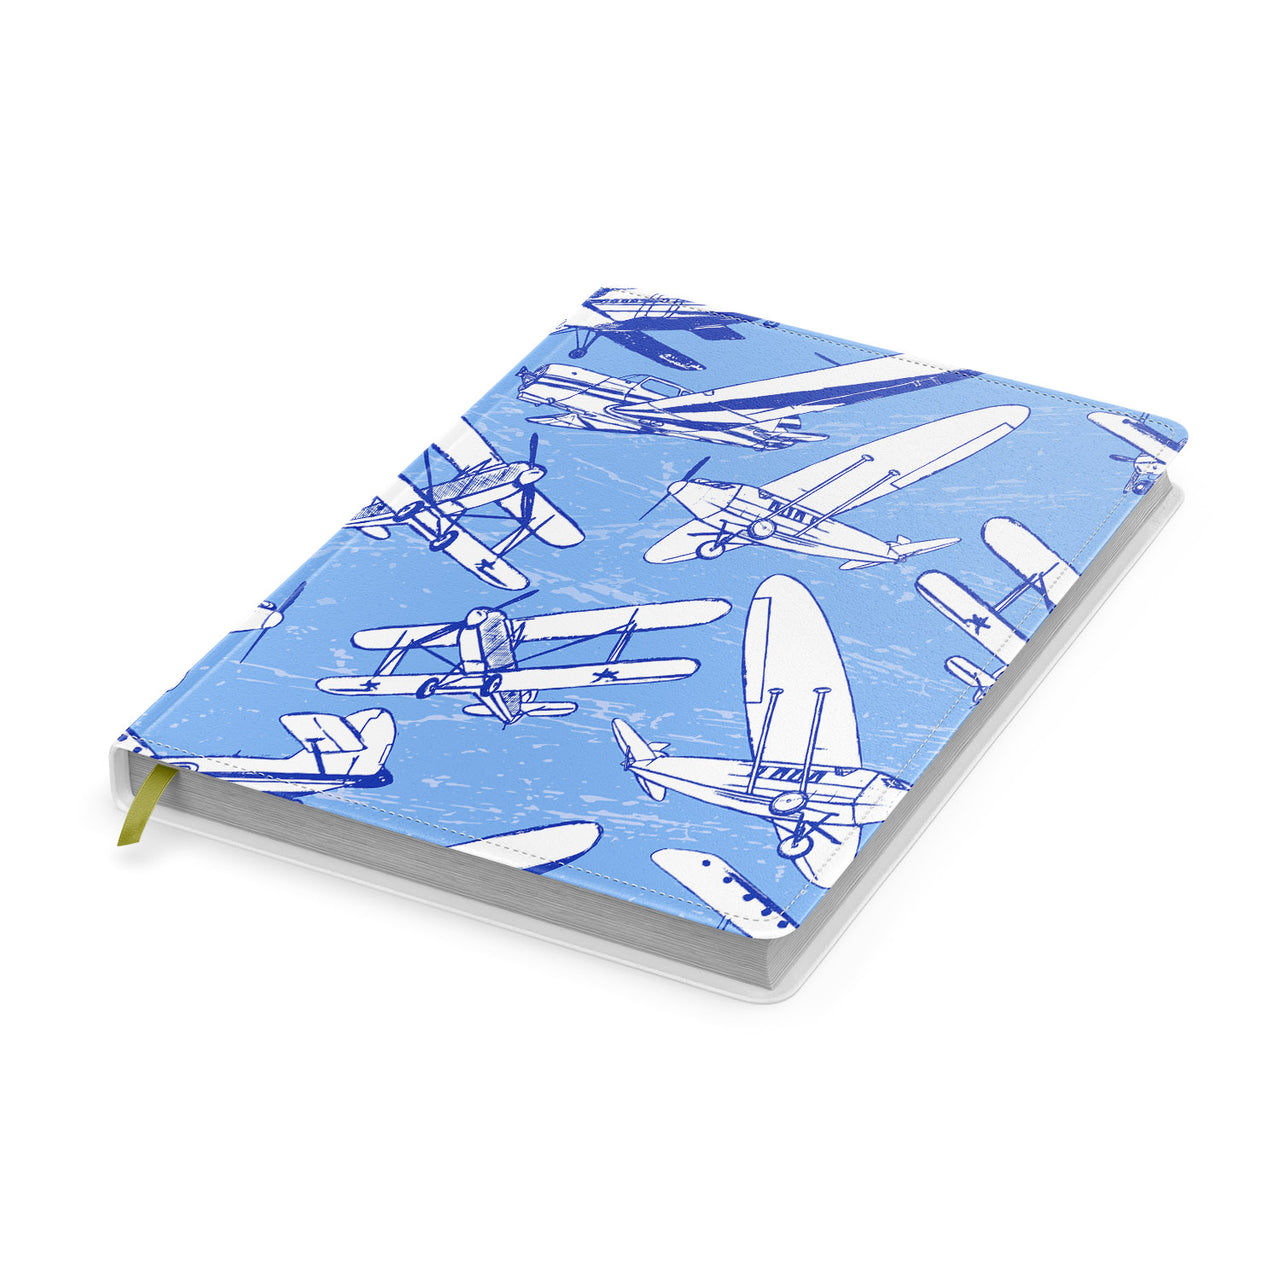 Retro & Vintage Airplanes Designed Notebooks